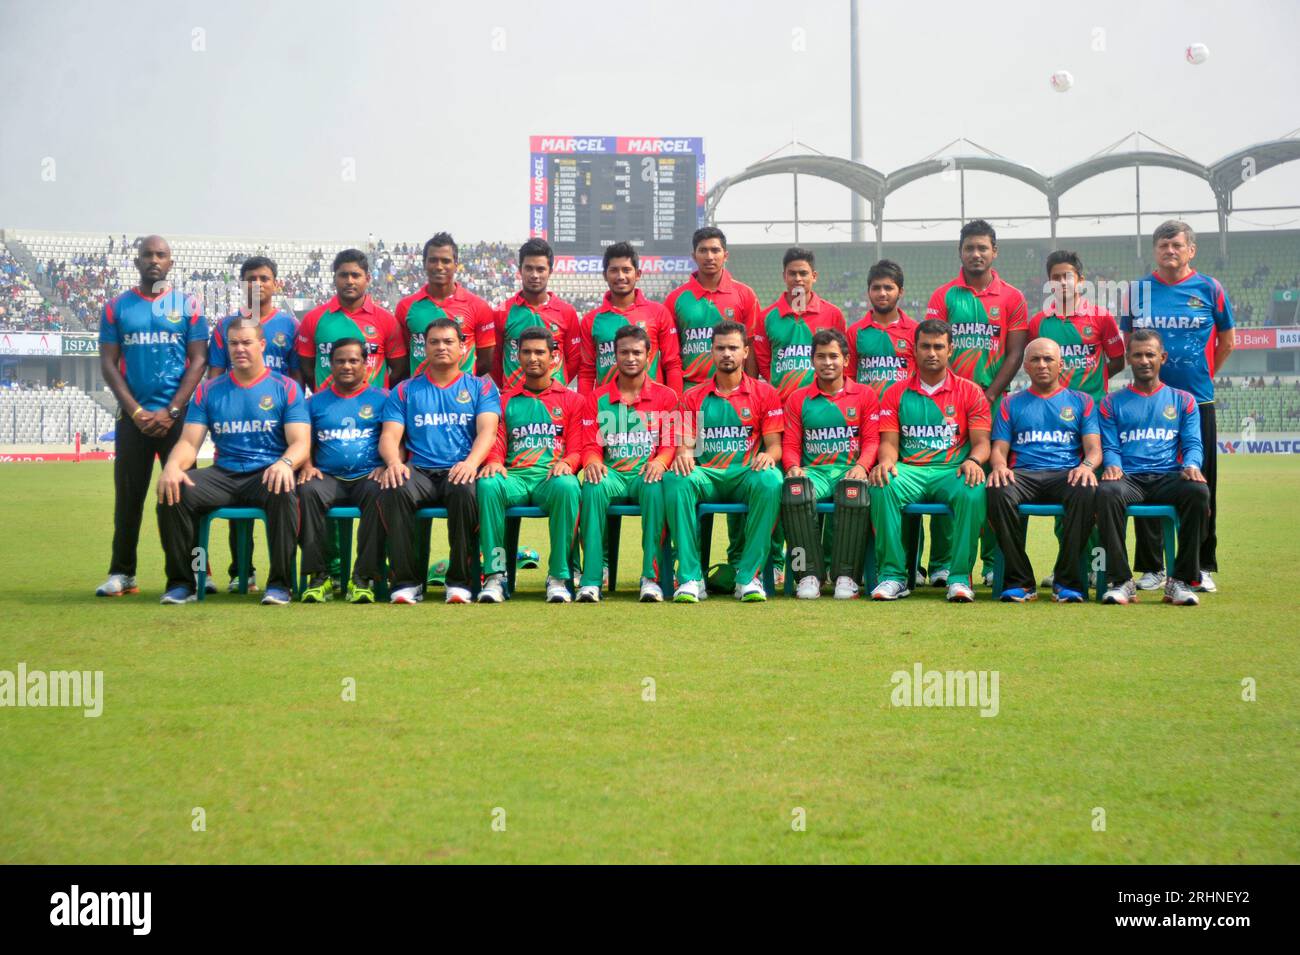 Bangladesh team group photo during the Bangladesh-Zimbabwe One Day International (ODI) match at the Sher-e-Bangla National Cricket Stadium, Mirpur, Dh Stock Photo